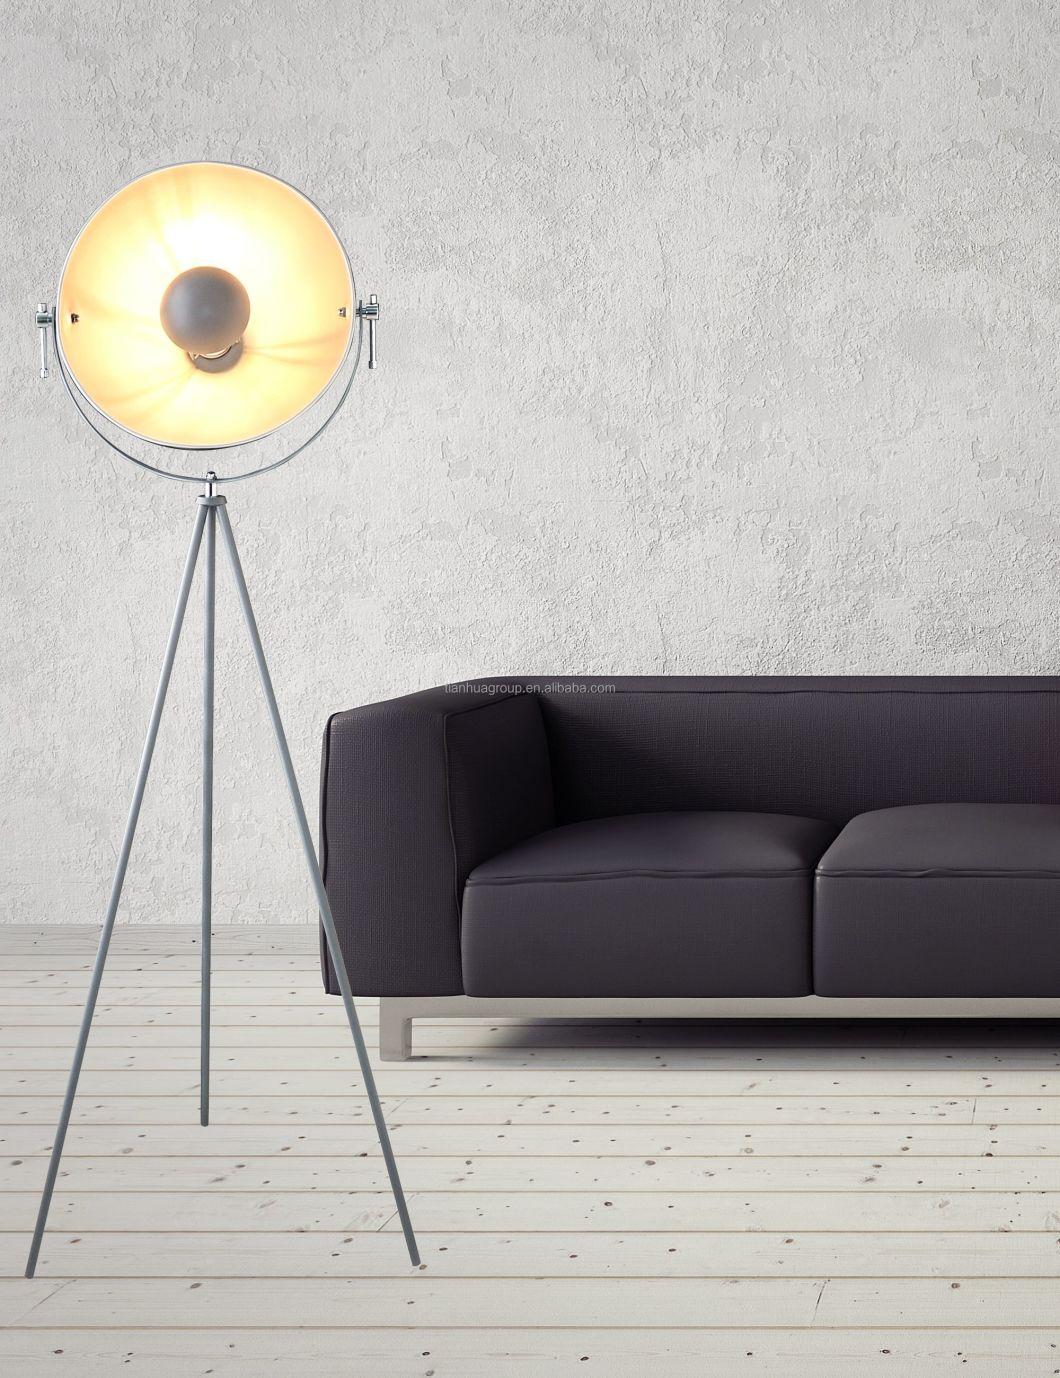 High Quality Modern Art Style Standing Lighting Decorative Metal Tripod Floor Lamp for Living Room